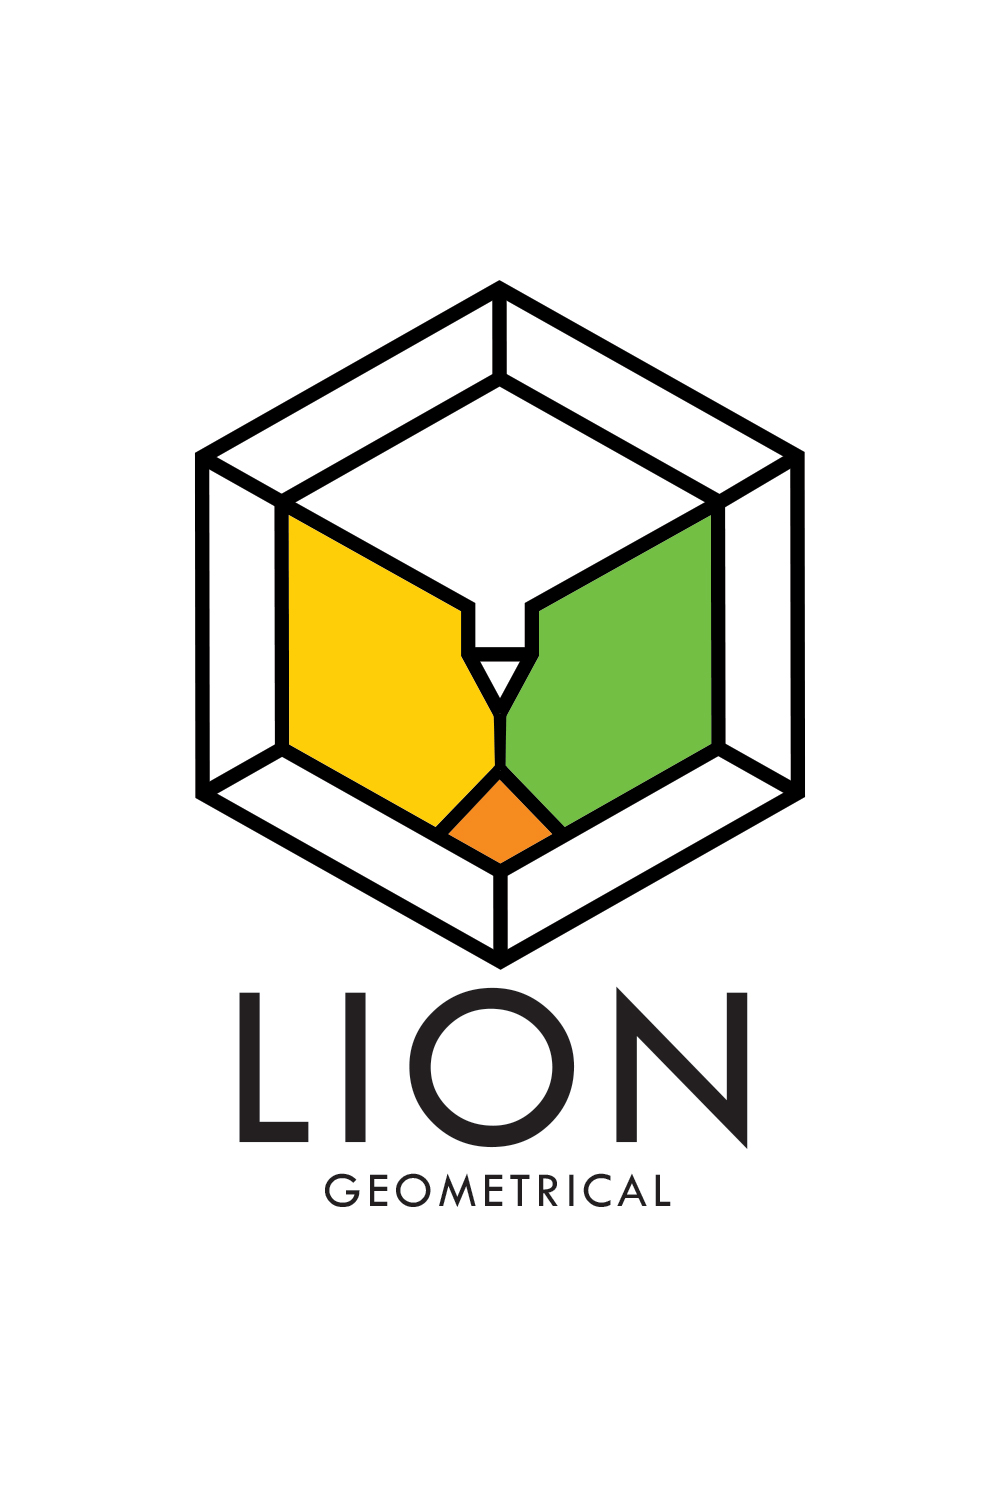 Line Art Geometrical African Lion Logo pinterest image.